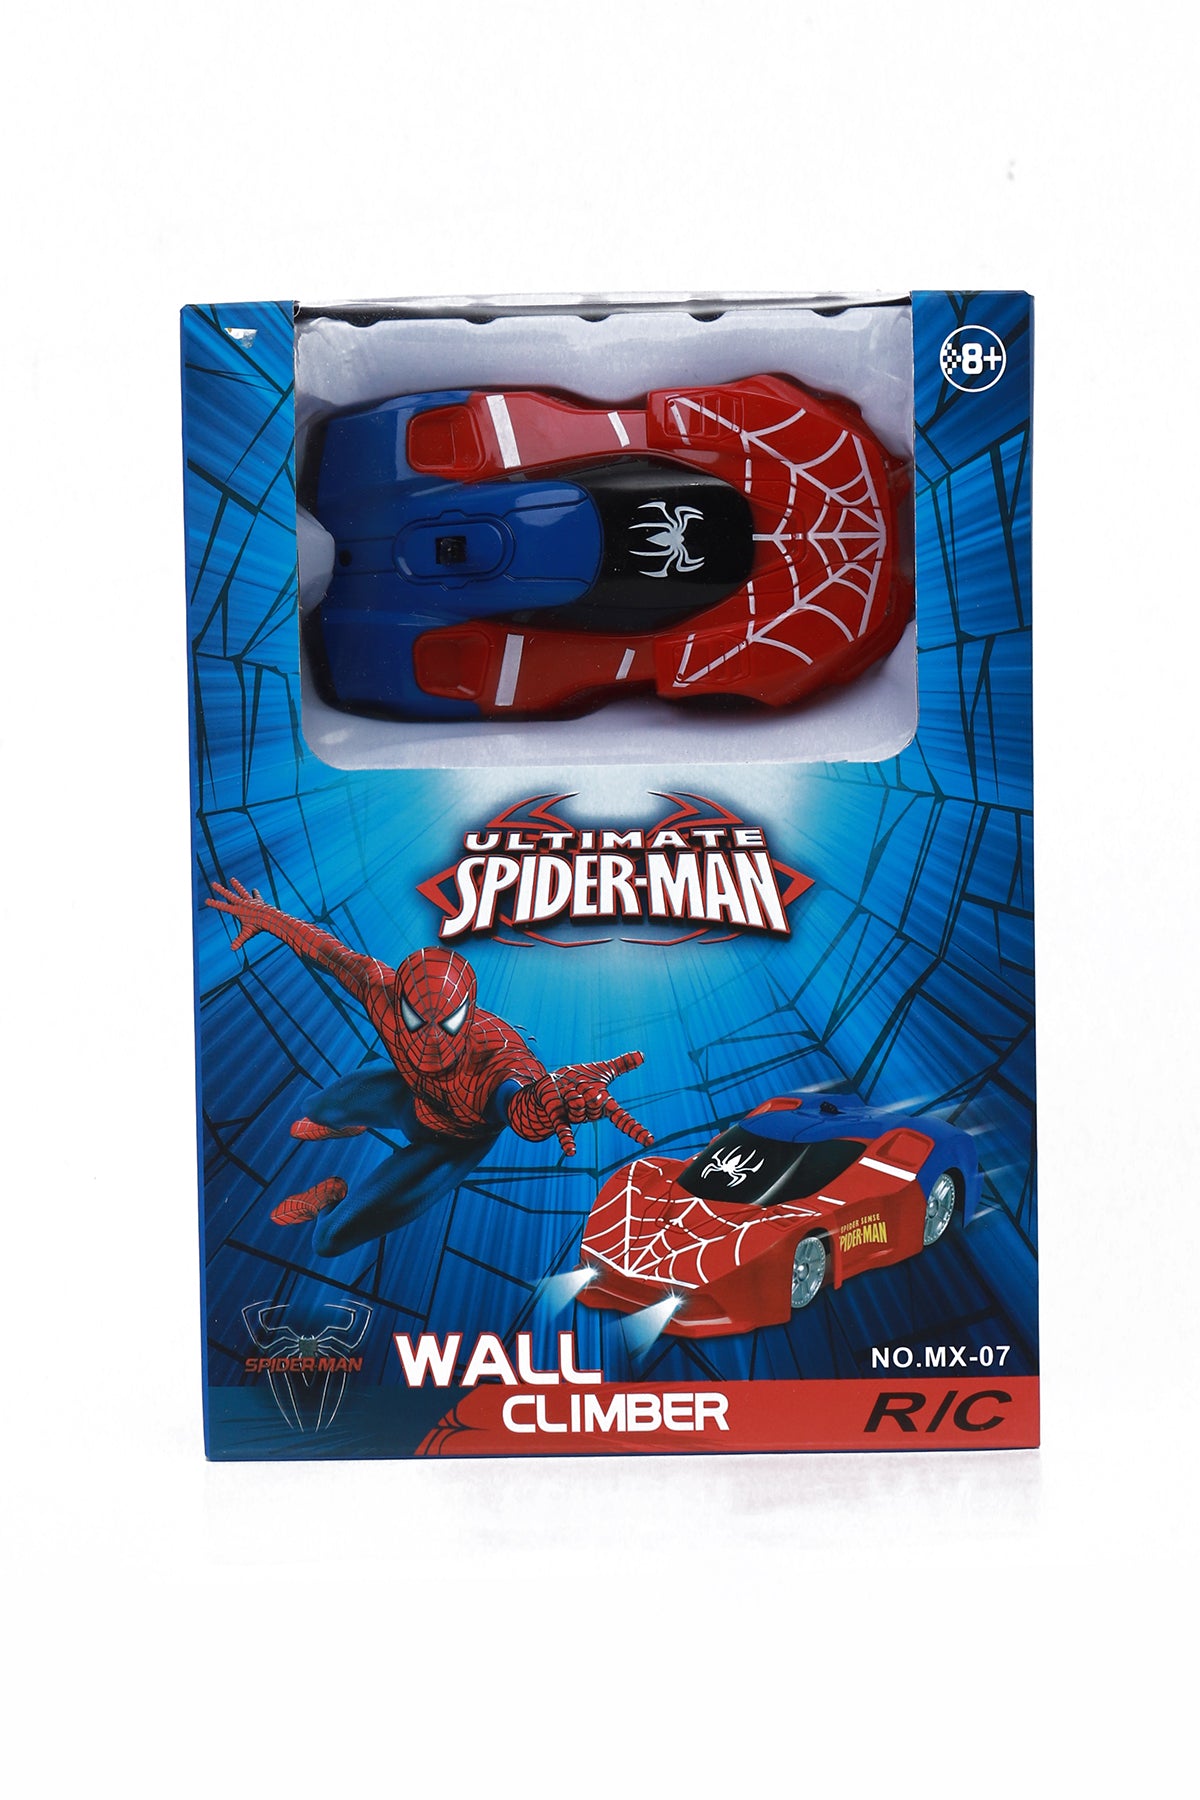 Remote Control Spiderman Wall Climber Toy Car